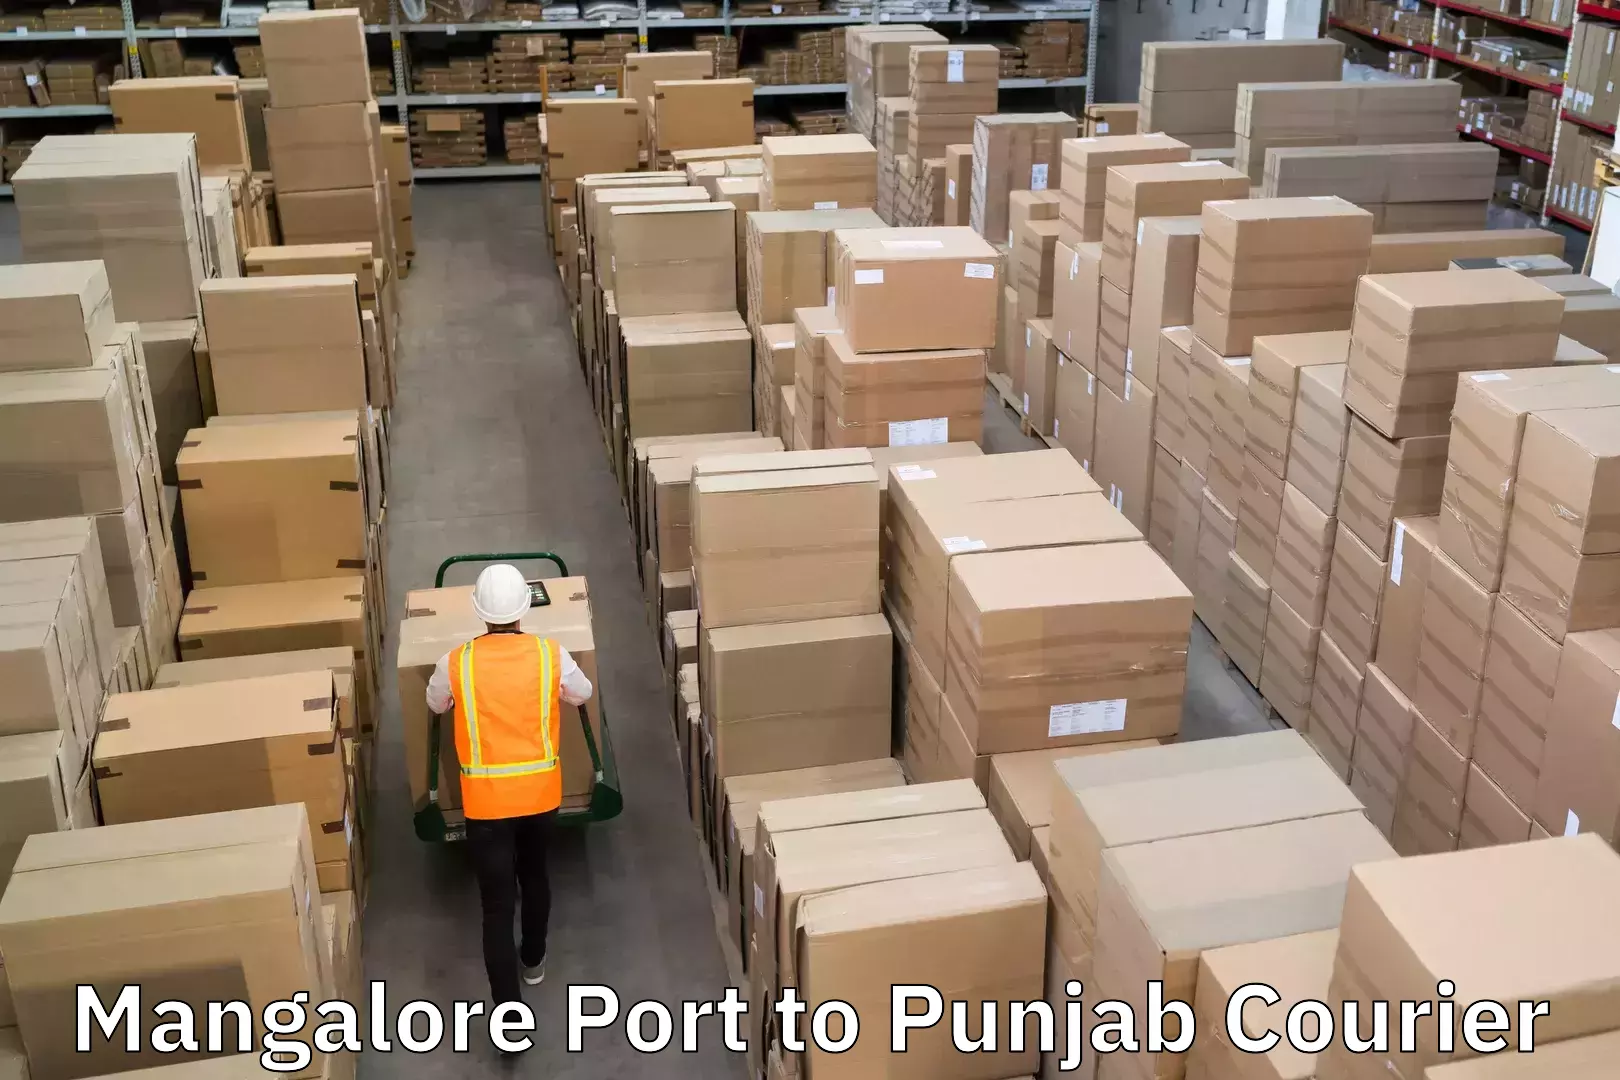 Express logistics providers Mangalore Port to Punjab